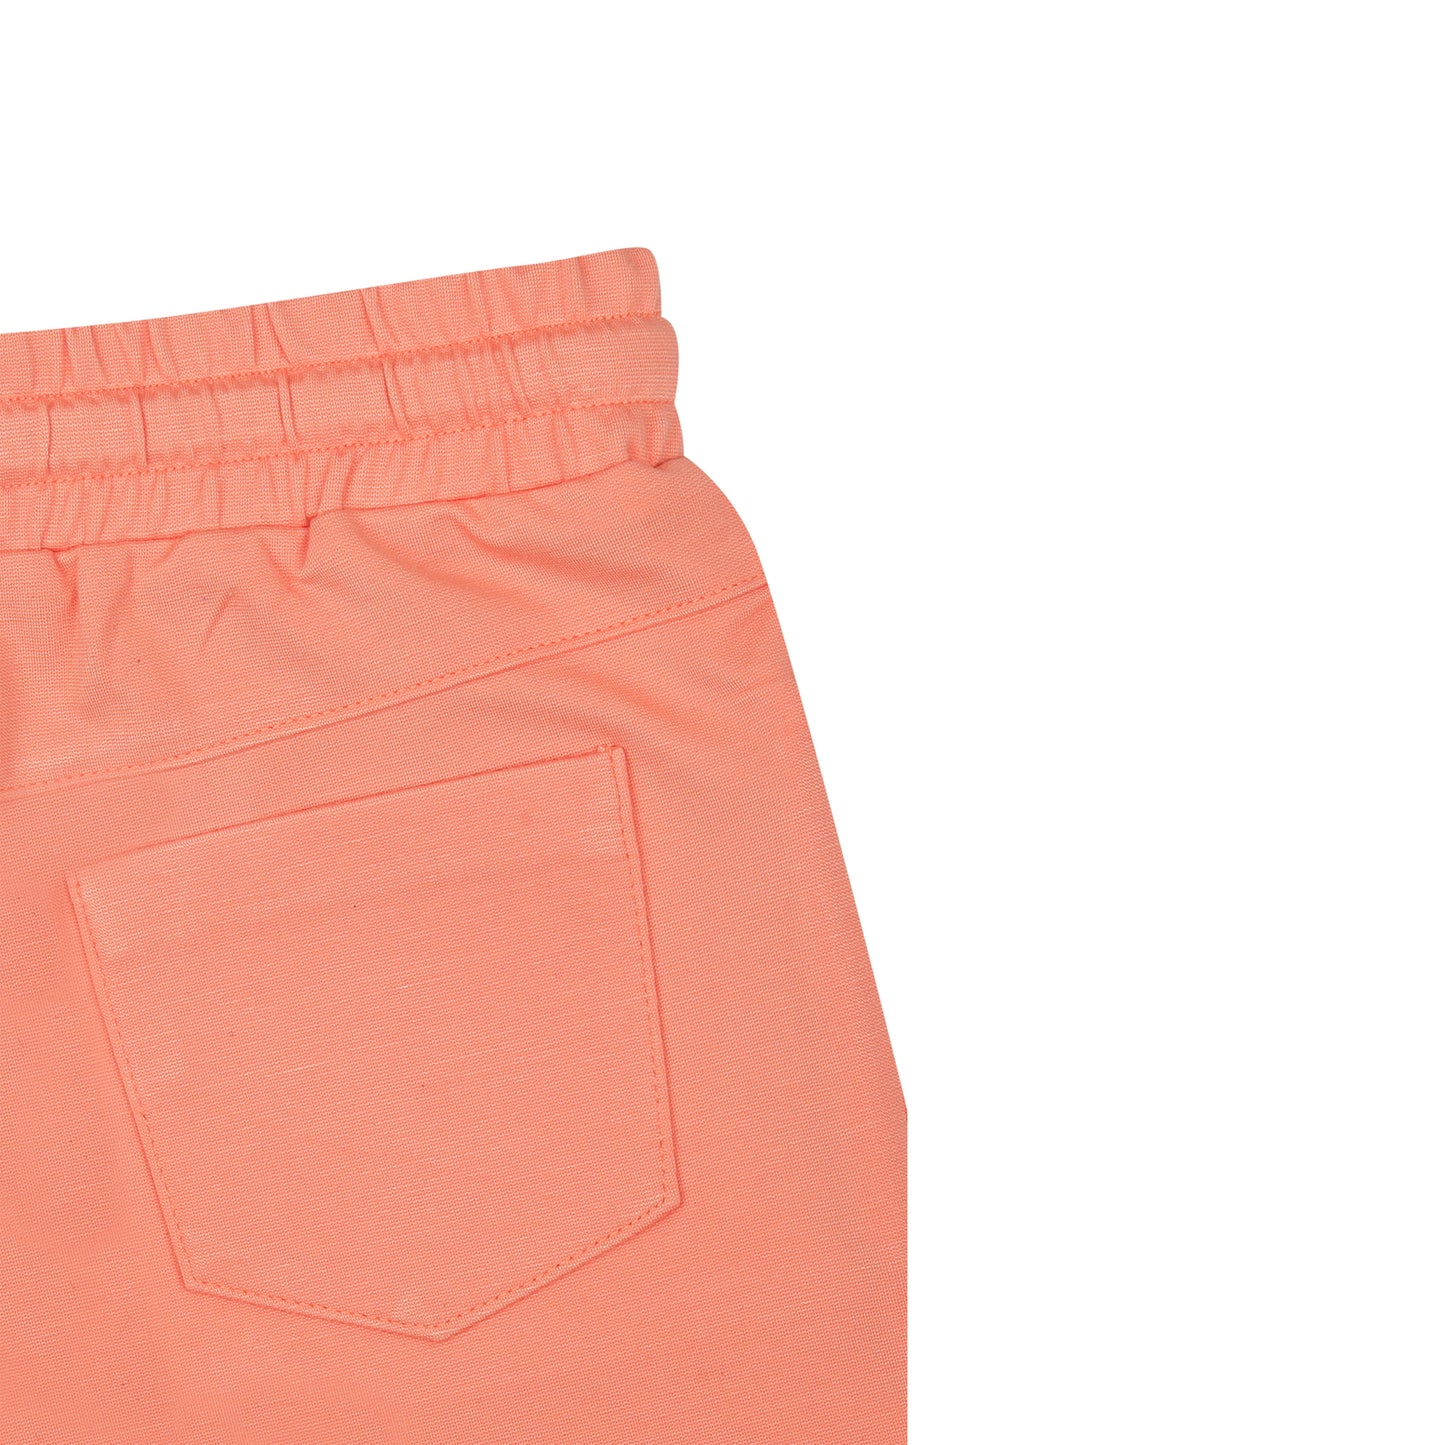 Basic Peach Tiny Girl Shorts